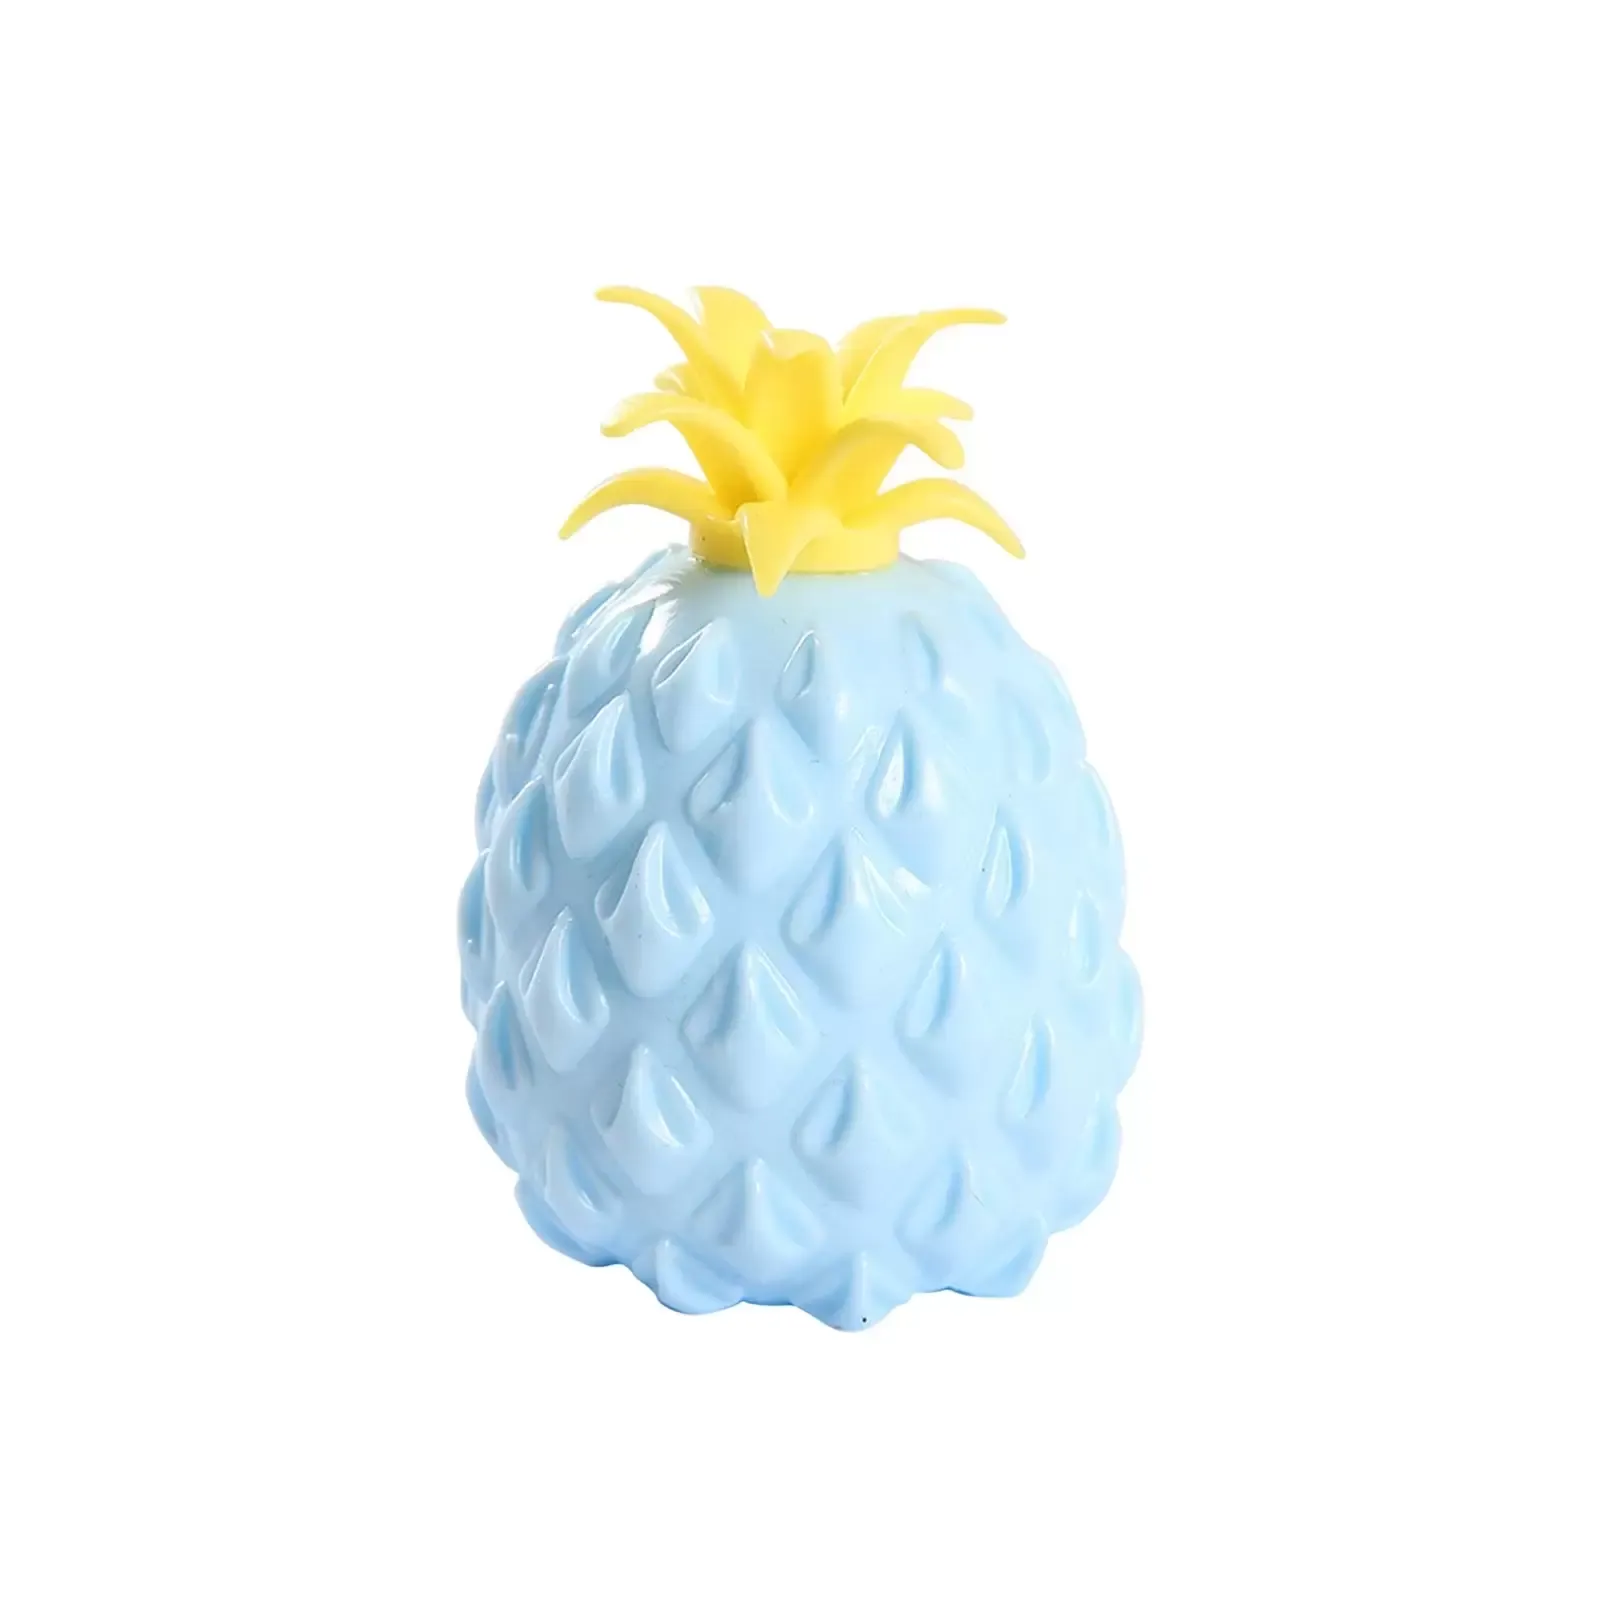 Cheap Flour Pineapple Relief Stress Balls Fidget Toys Squeeze Fruit Anti Stress Decompression for Kids Antistress Children FY4719 sxmy20